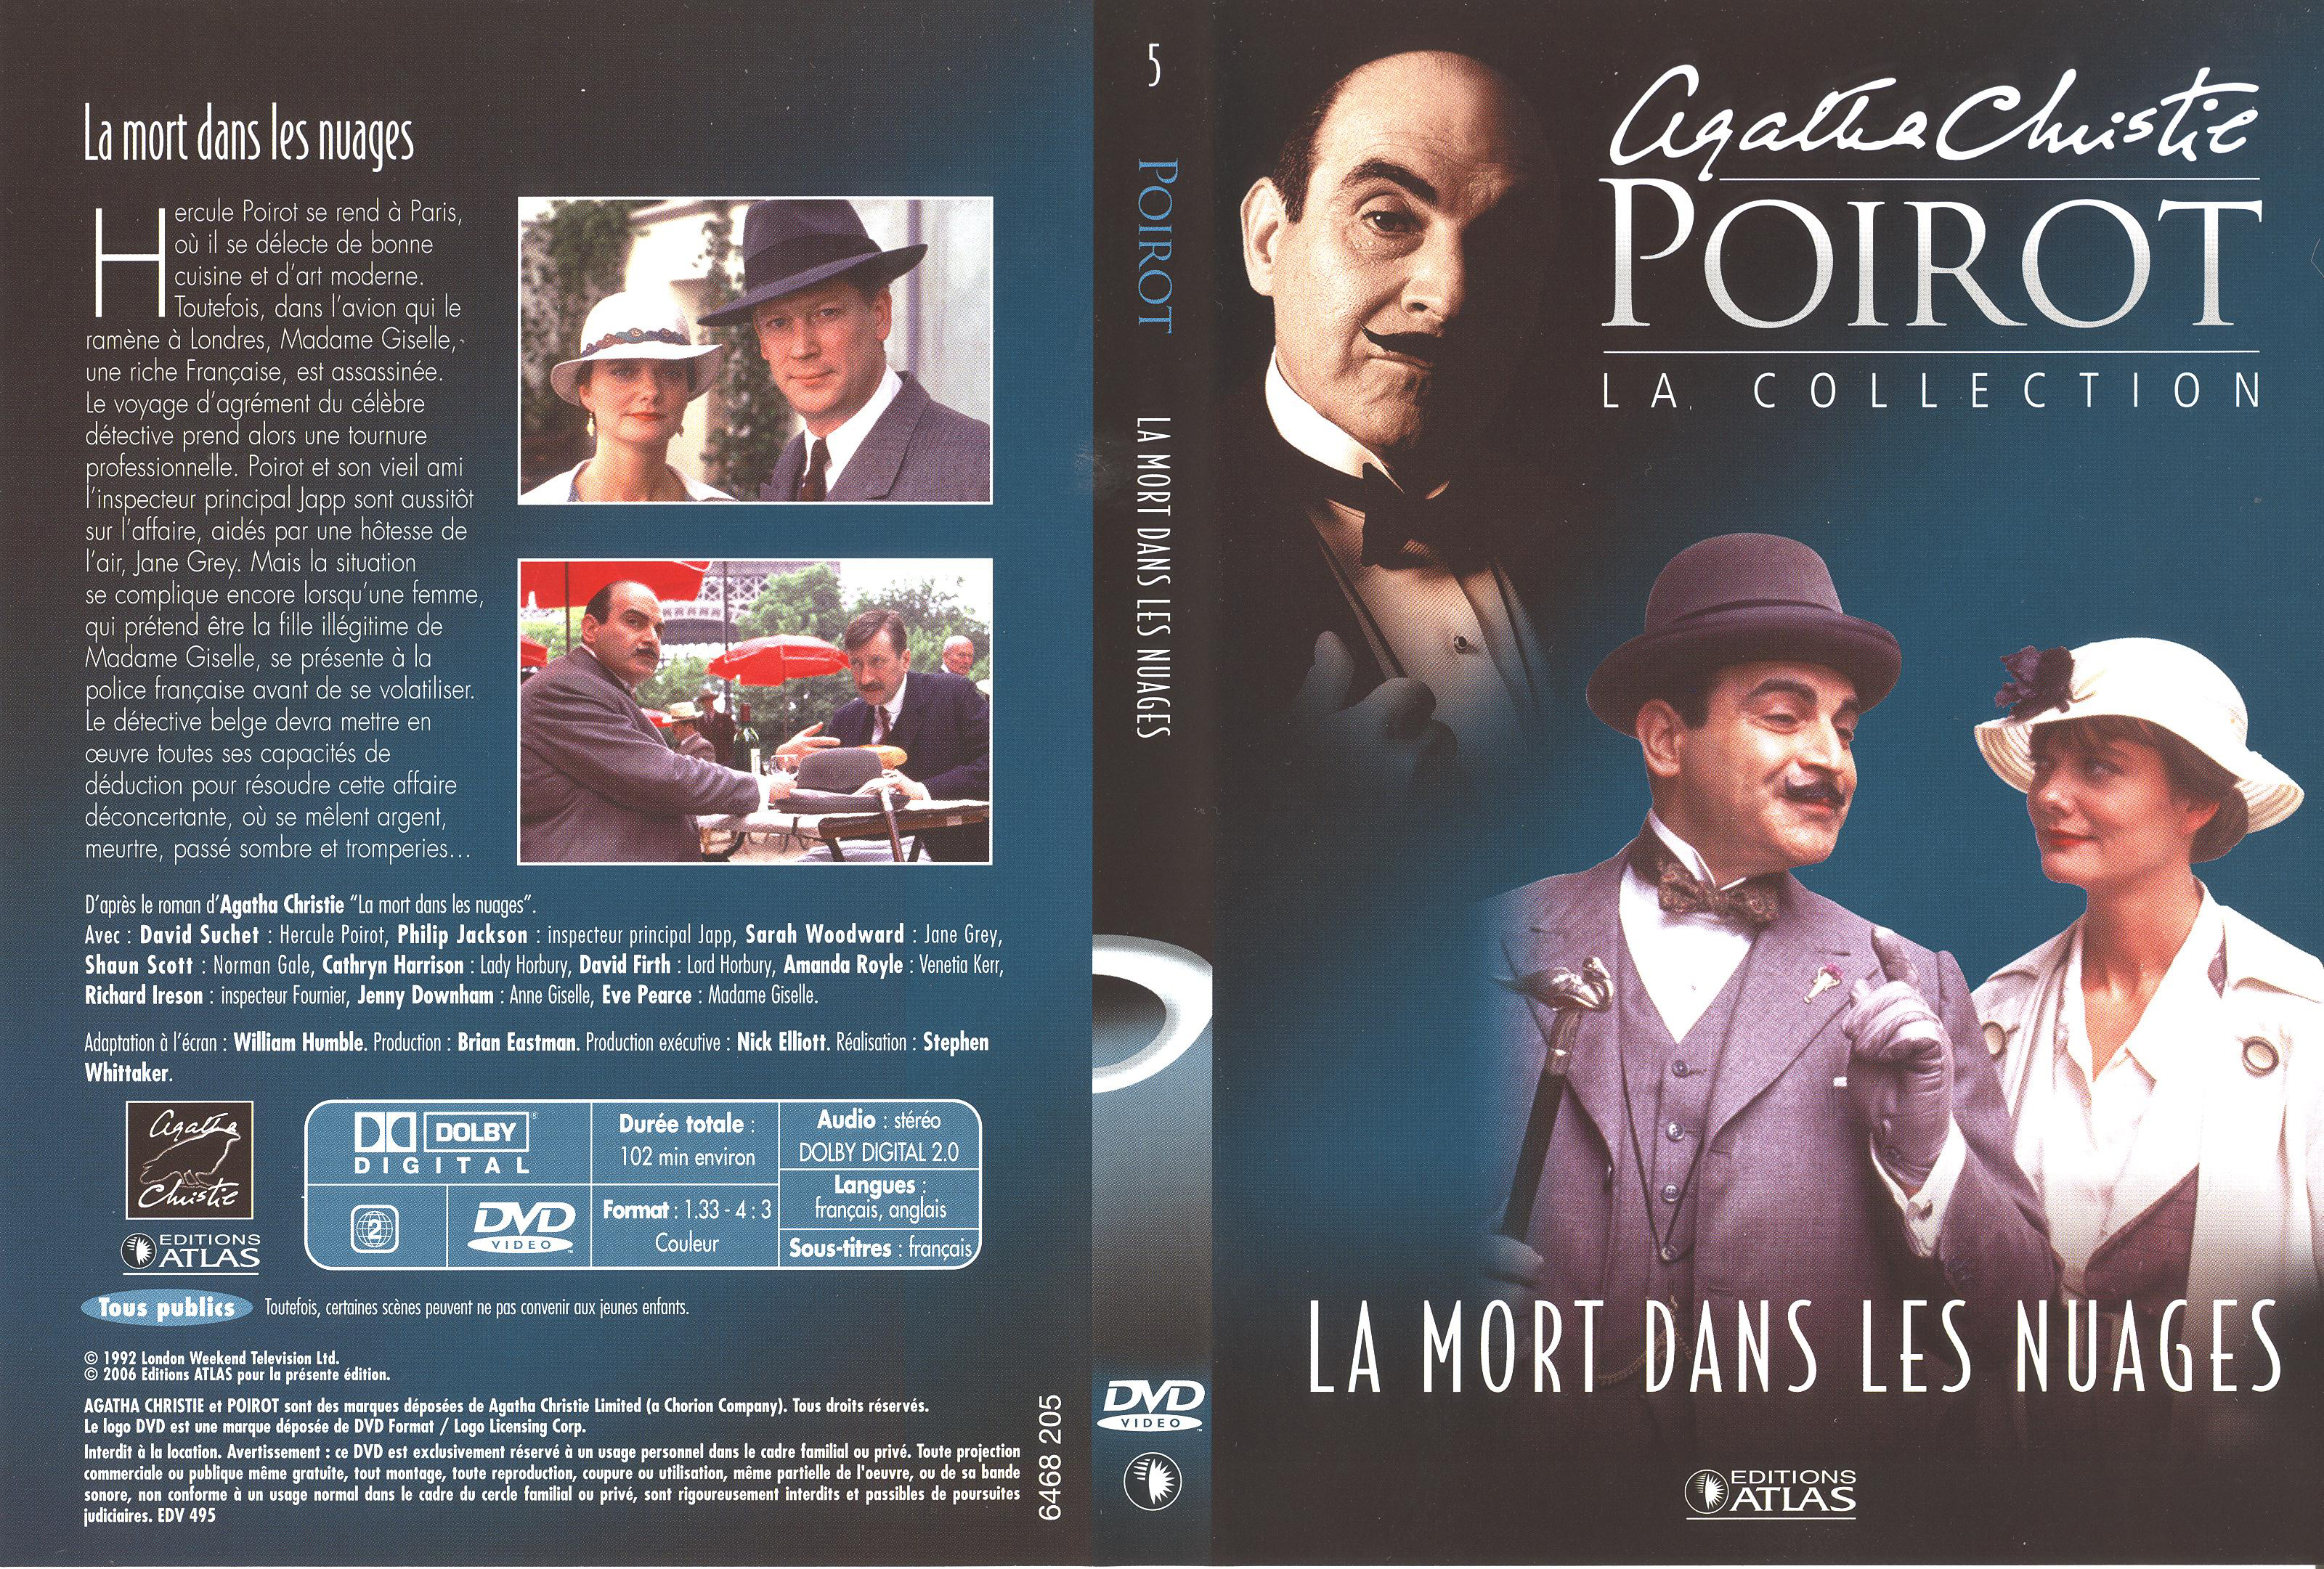 Jaquette DVD Hercule Poirot vol 5